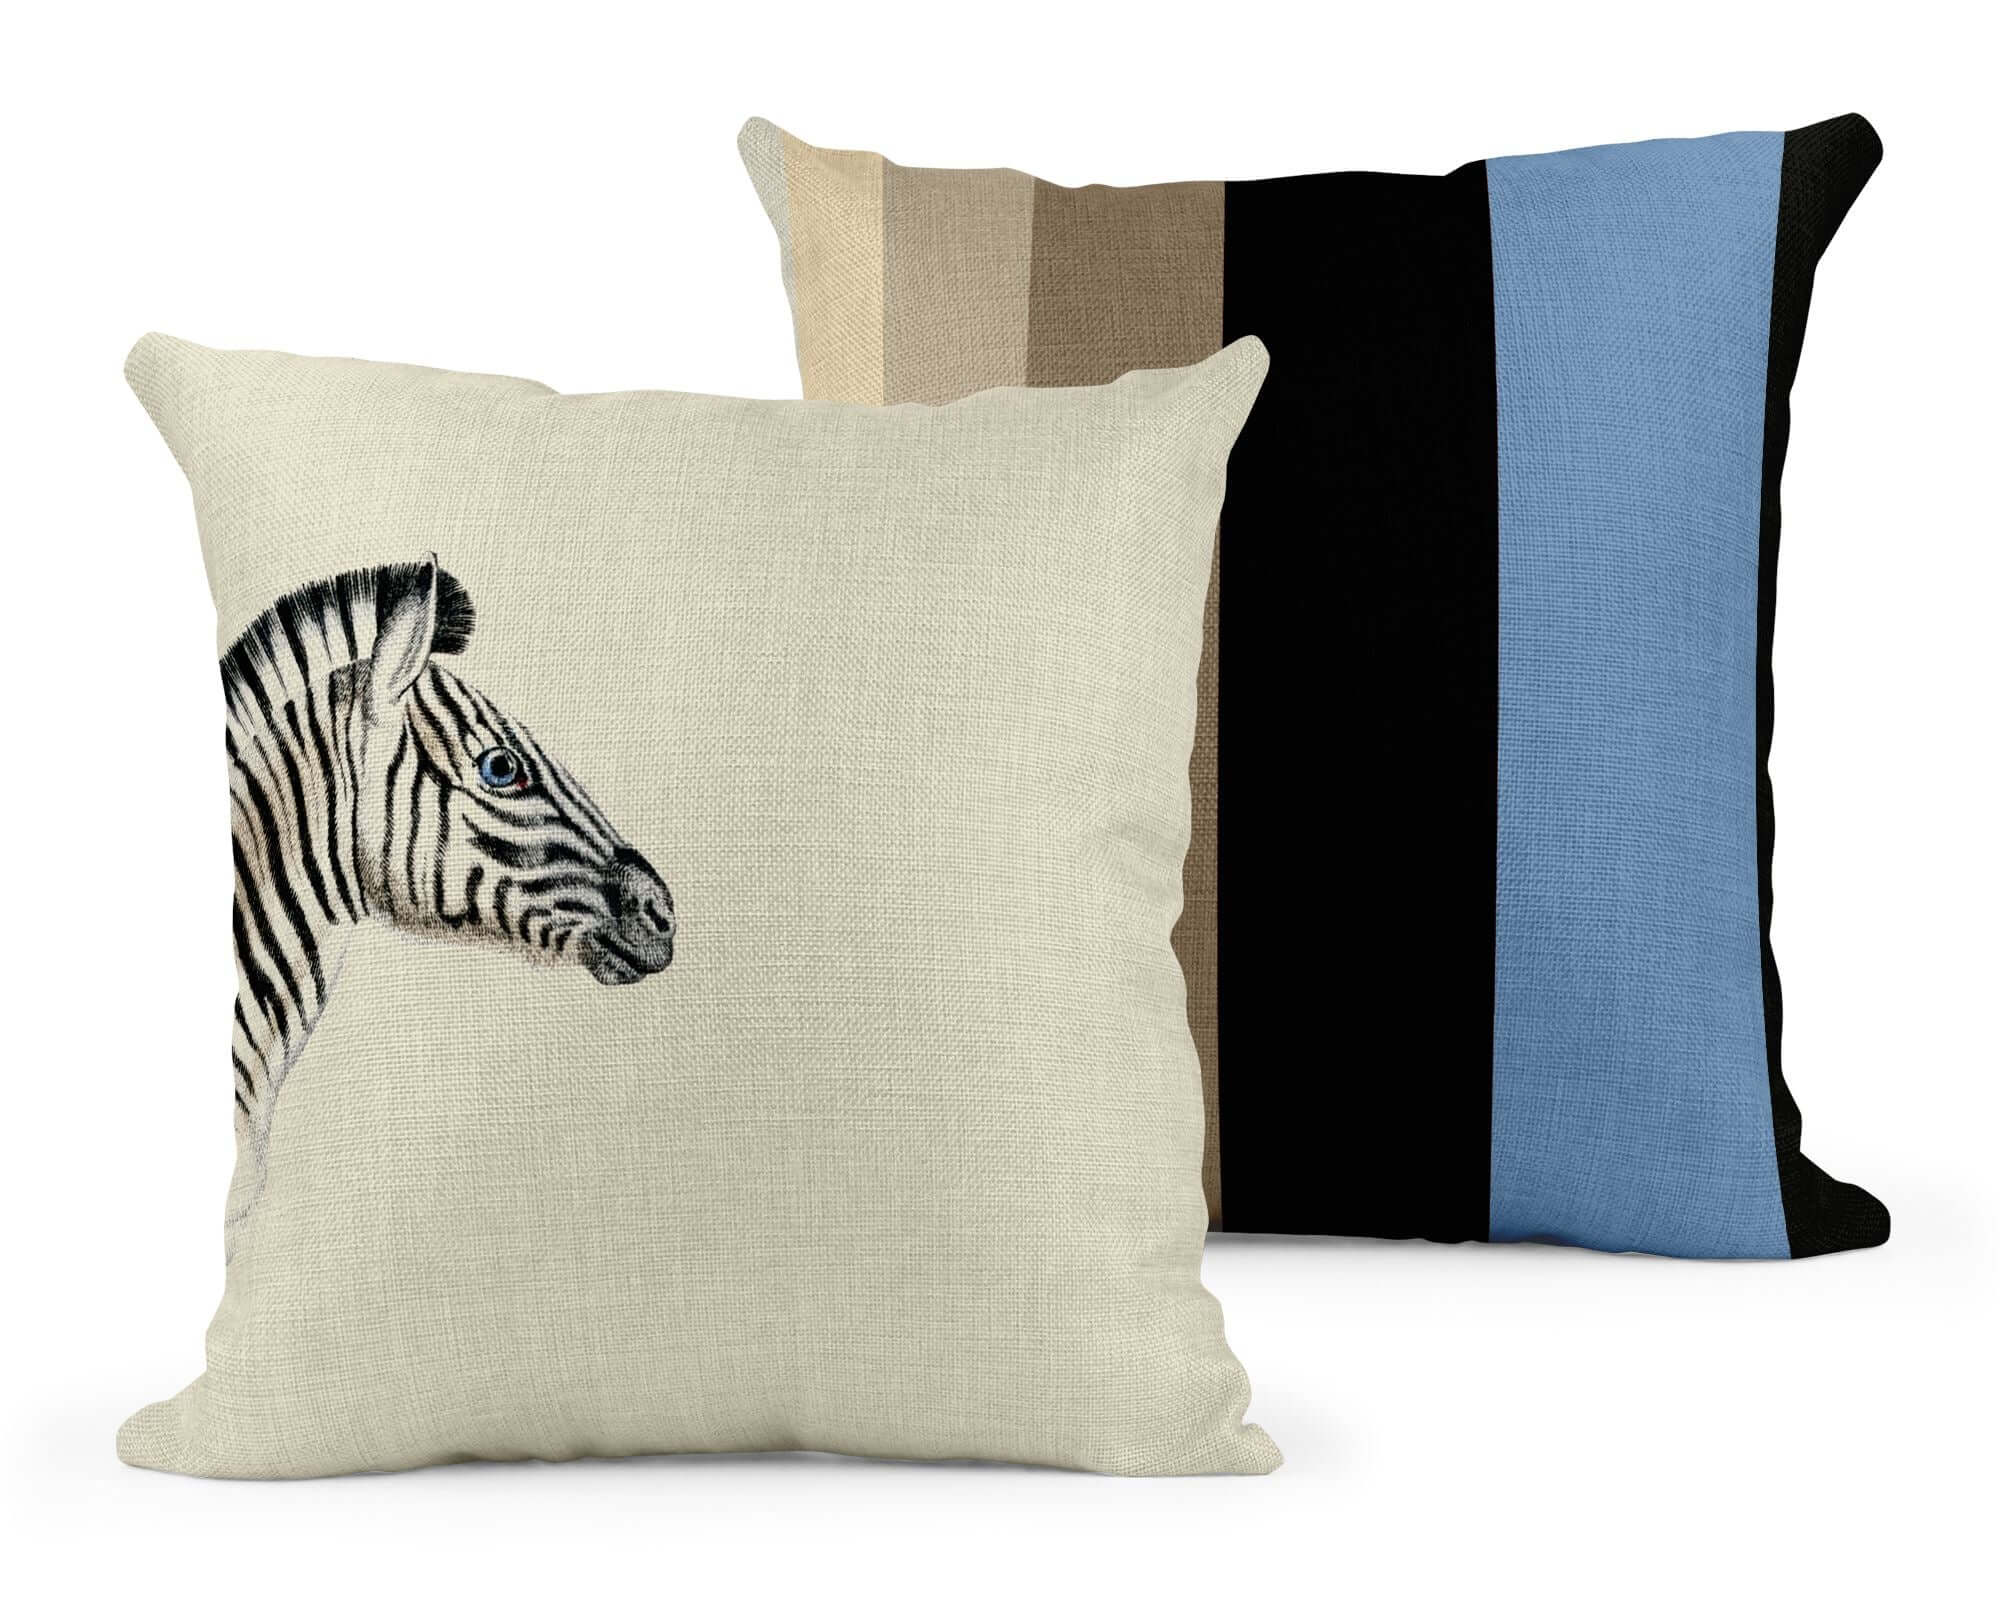 Zebra Stripe Cushion Cushions Mustard and Gray Ltd Shropshire UK